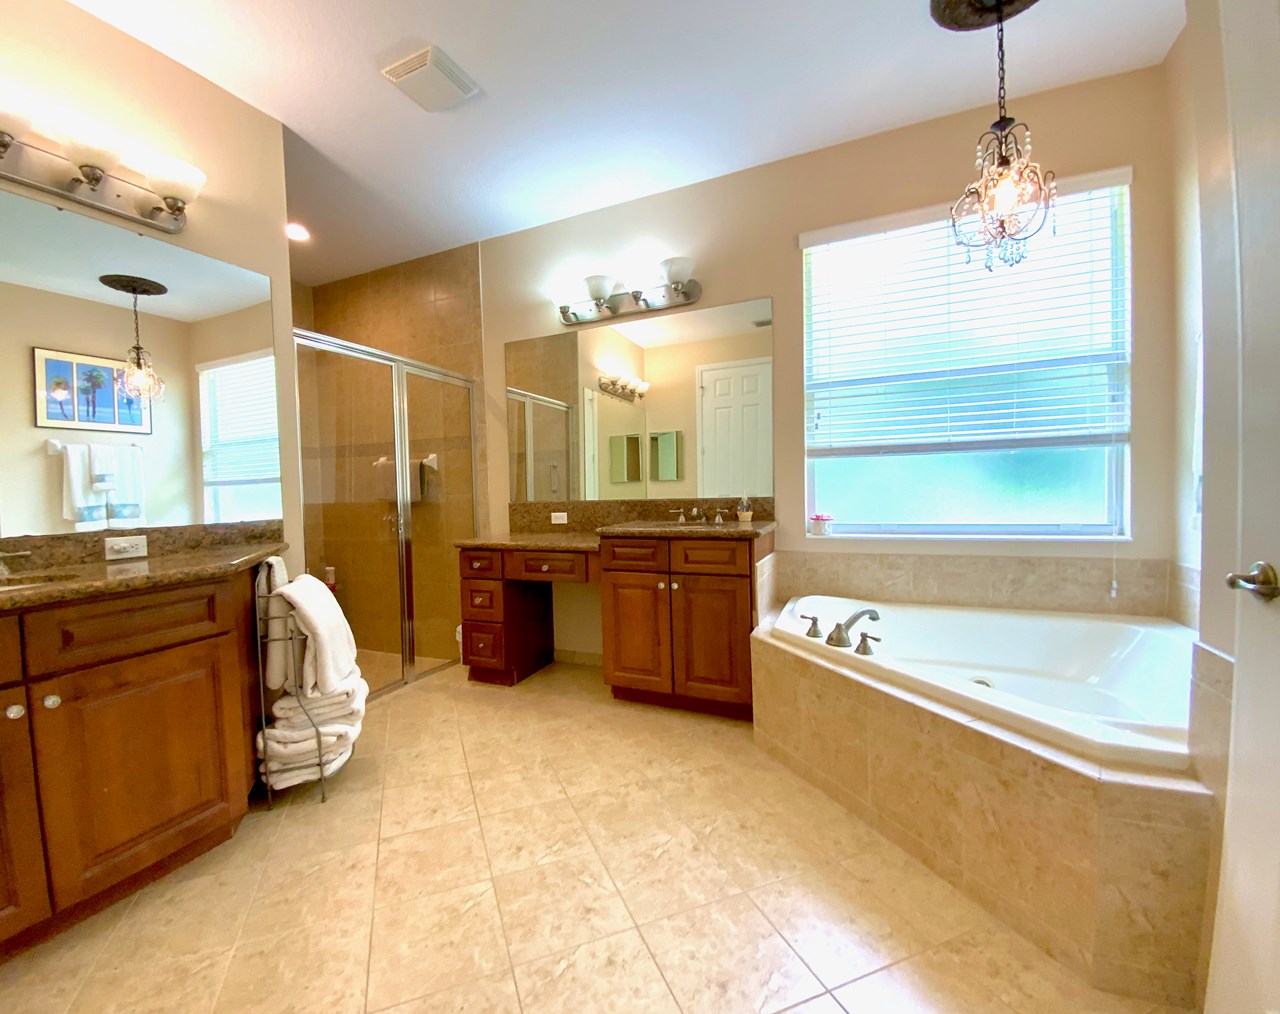 master bathroom-tub & separate shower